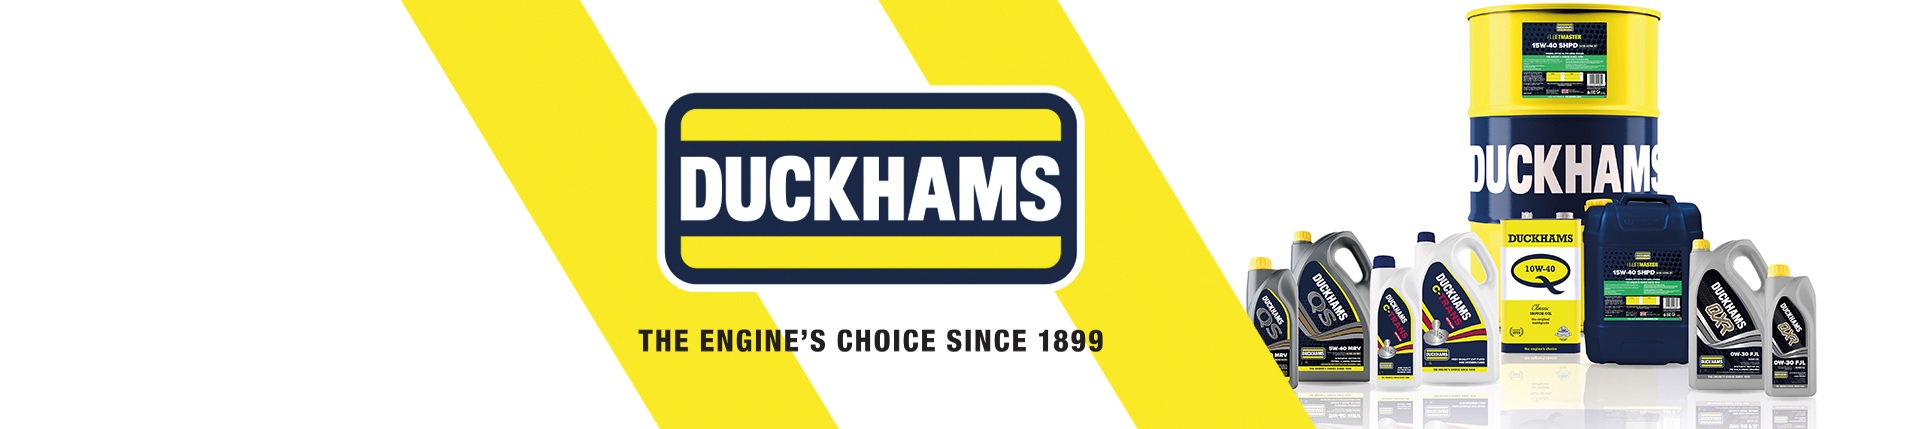 Duckhams Oil